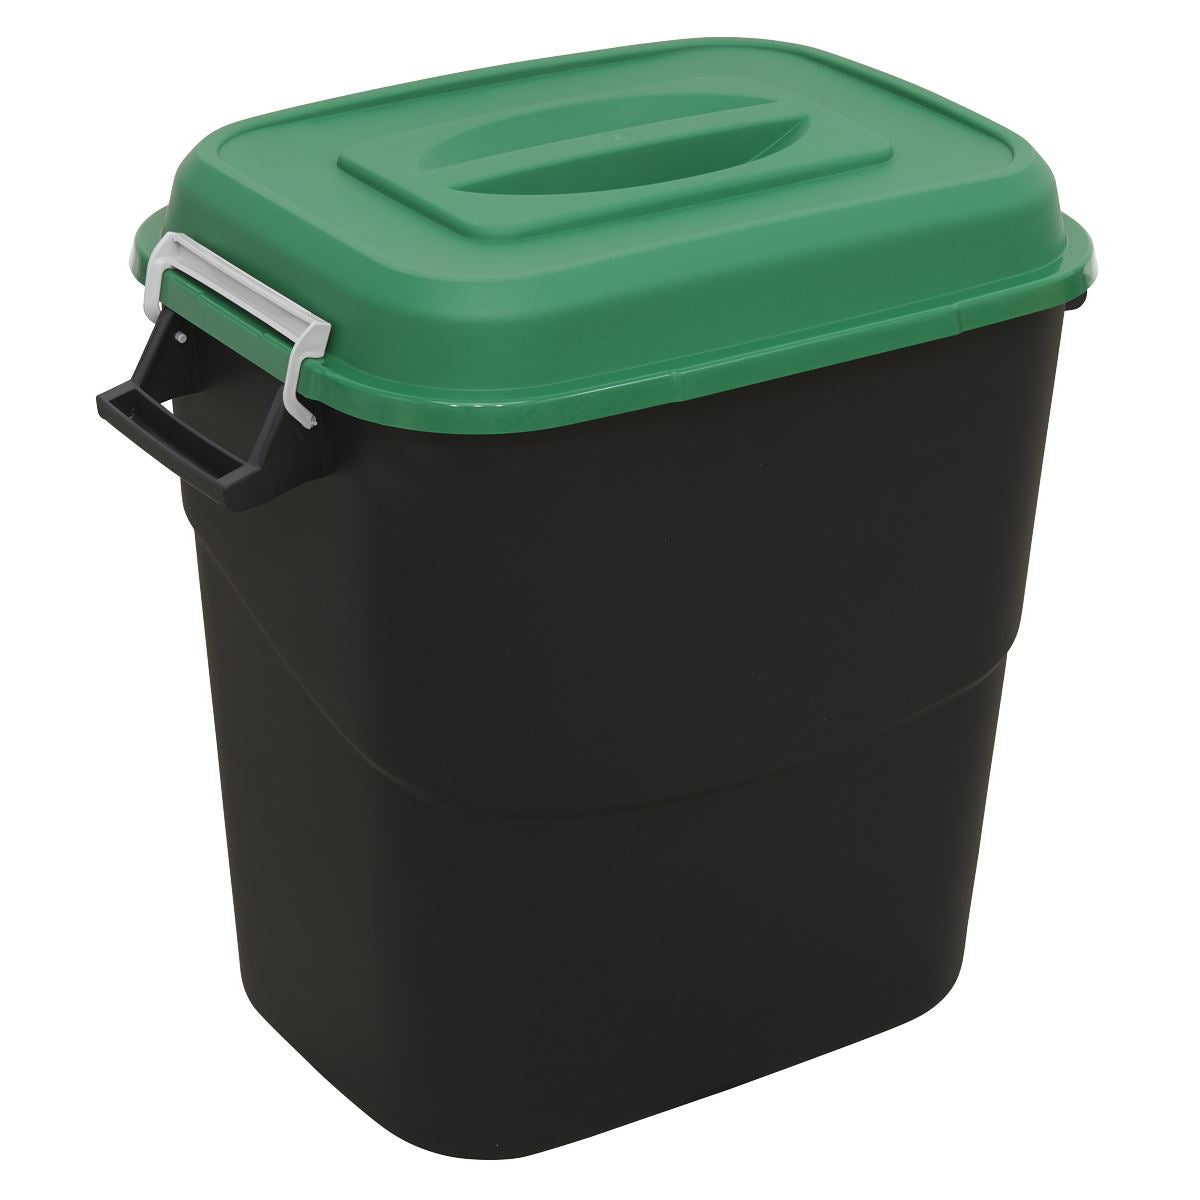 Sealey Refuse/Storage Bin 75L - Green